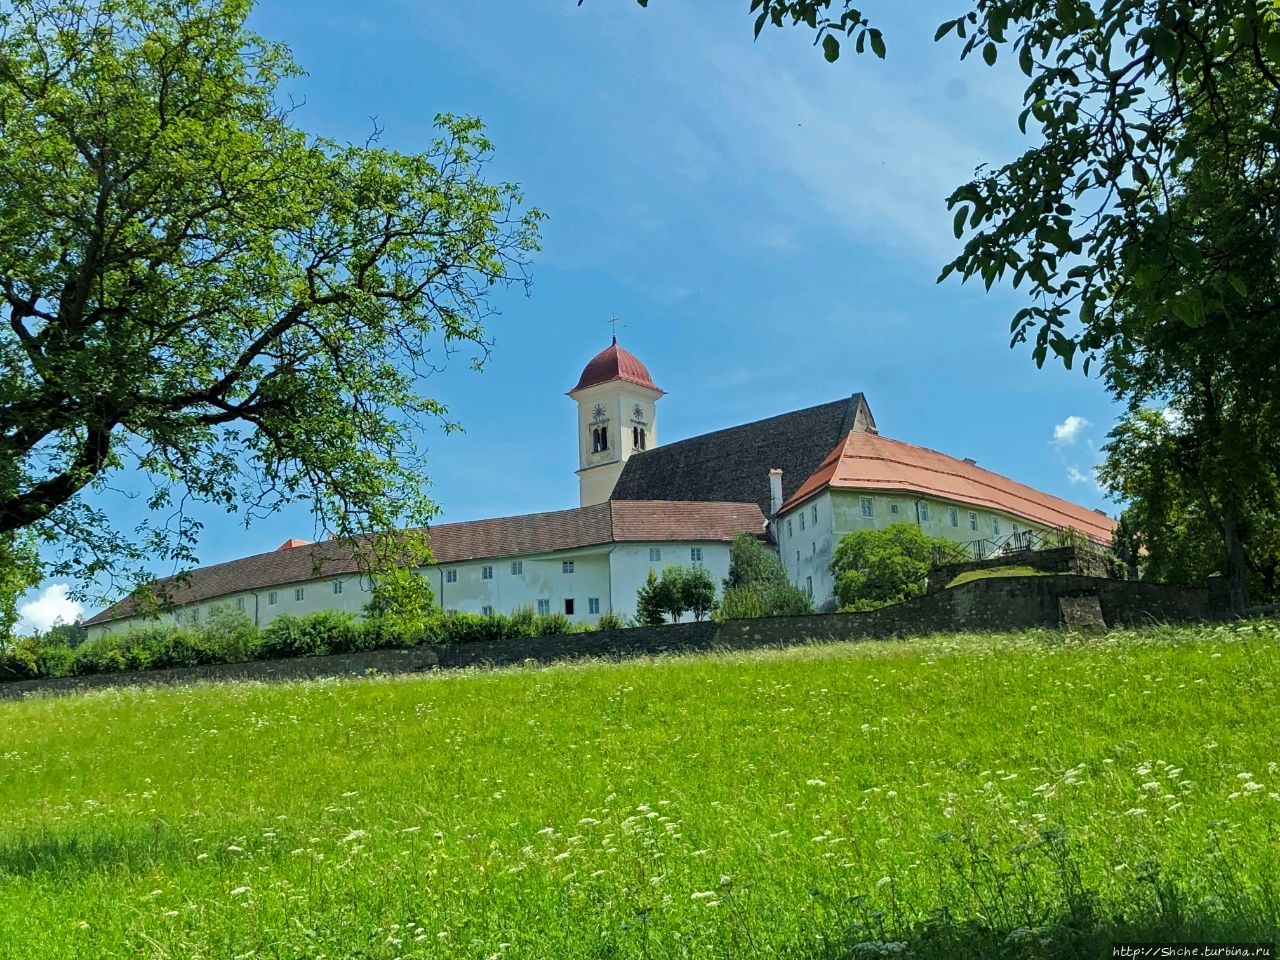 Тысячелетнее аббатство на озере Лангзее. Современные реалии